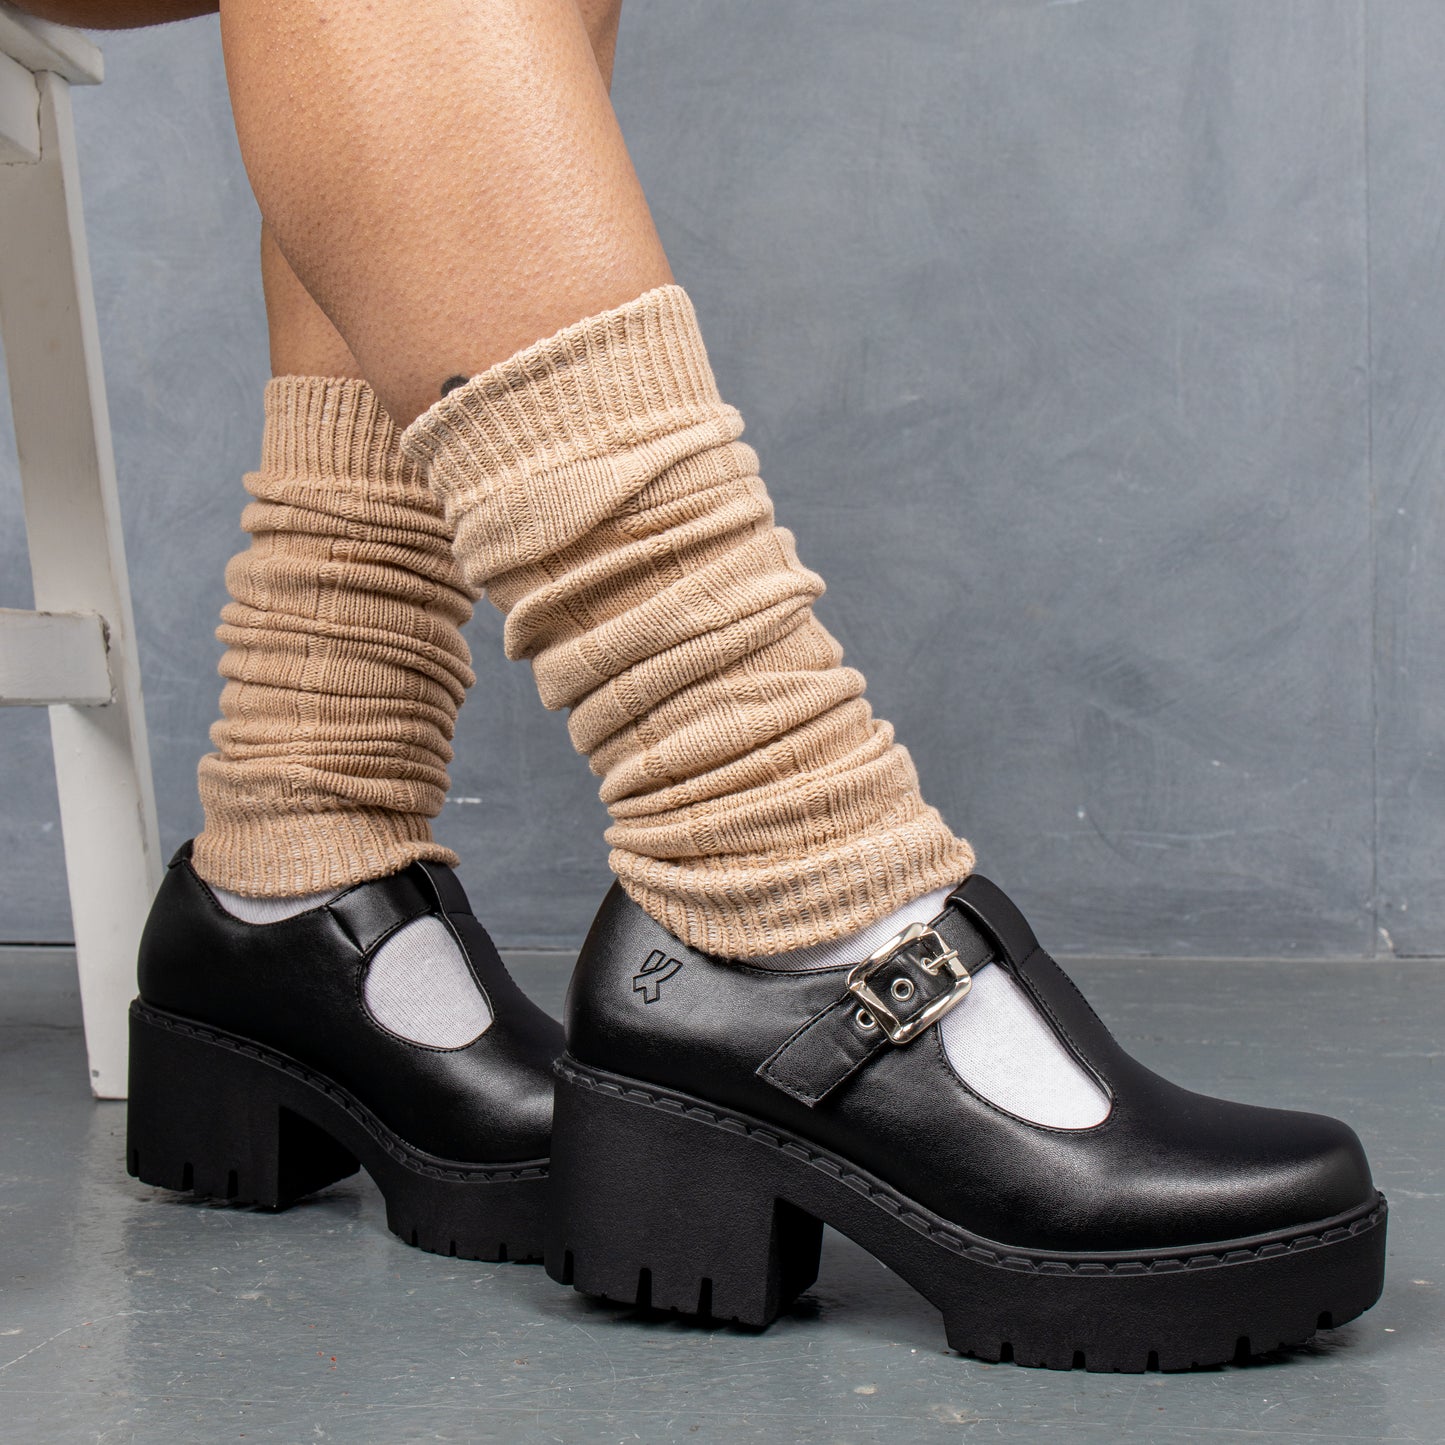 Kazuki Switch Mary Jane Shoes - Mary Janes - KOI Footwear - Black - Model Right View